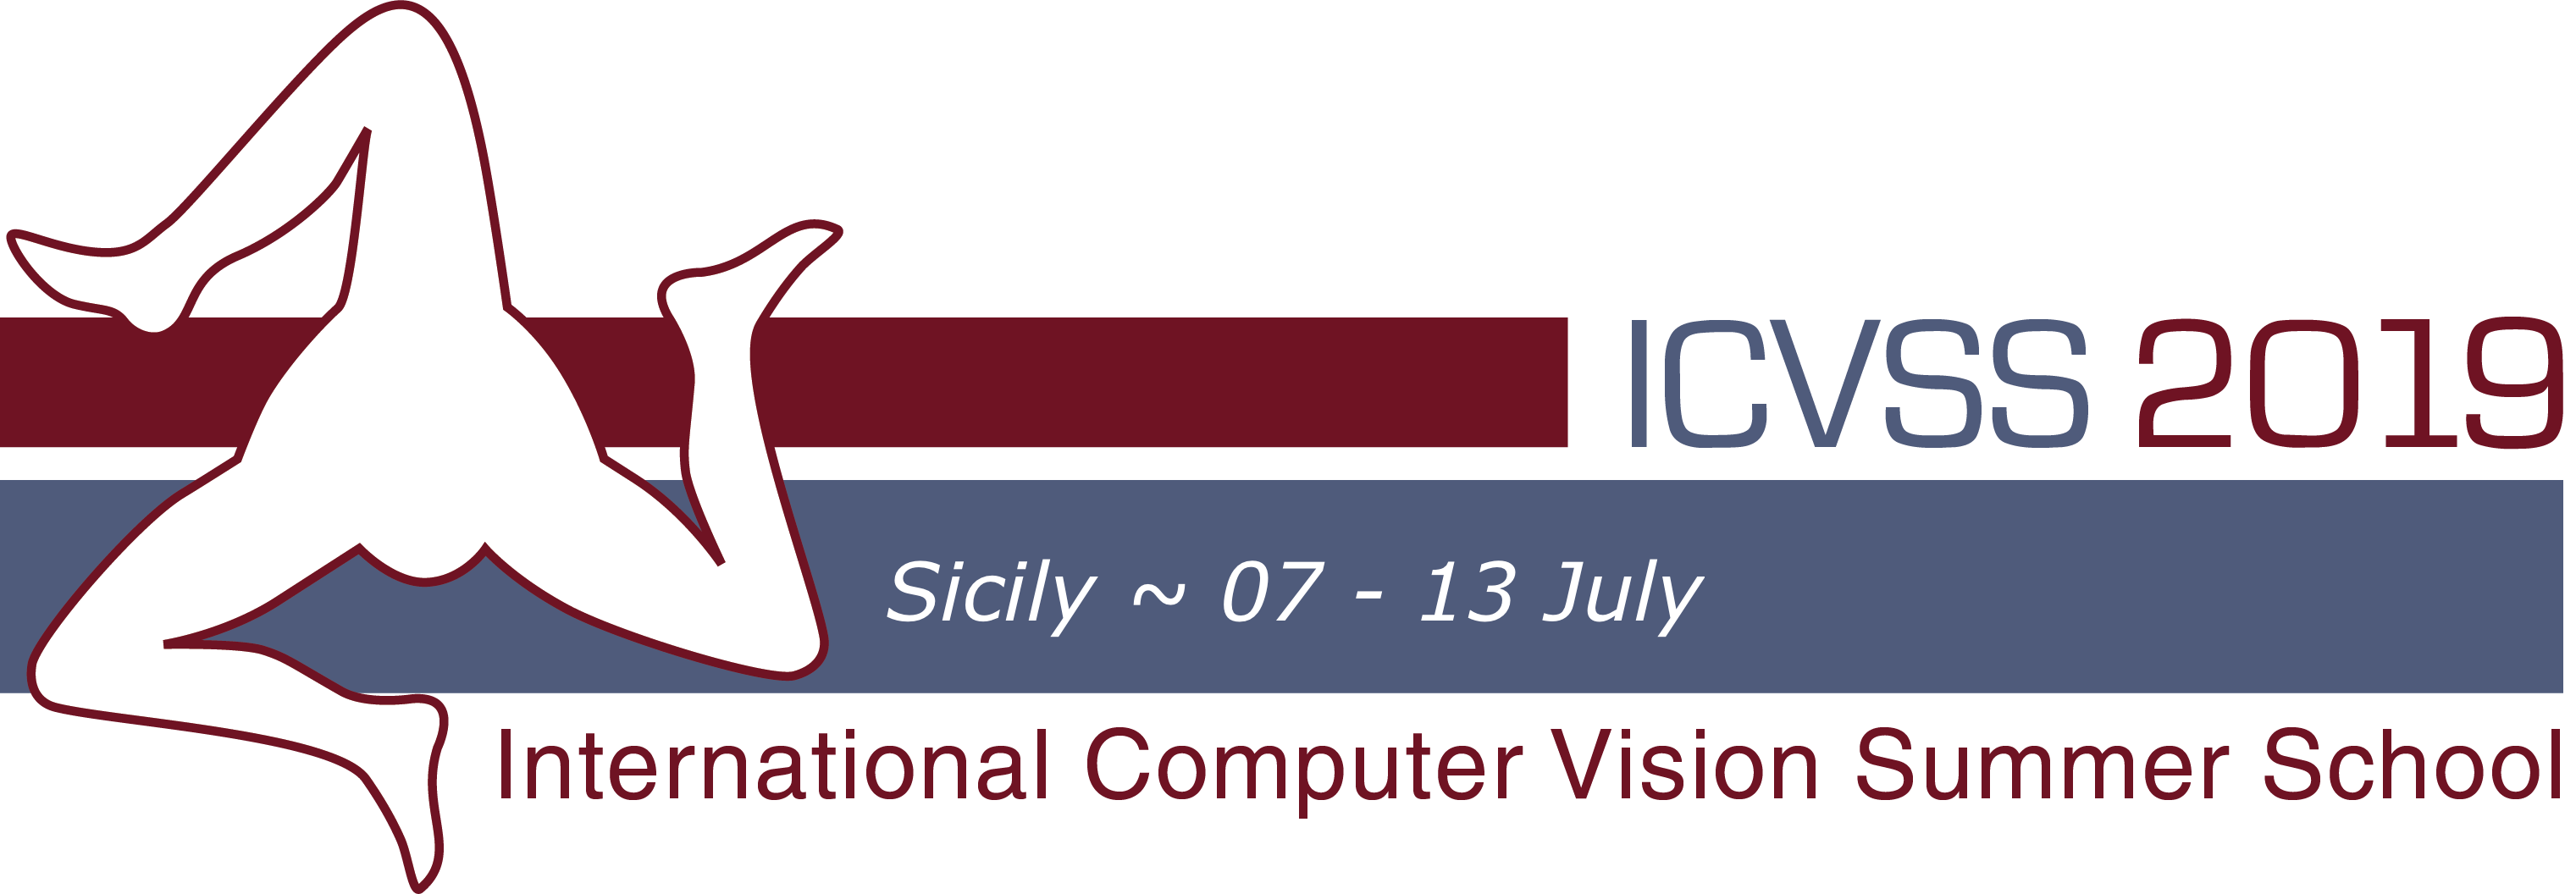 logo ICVSS 2019